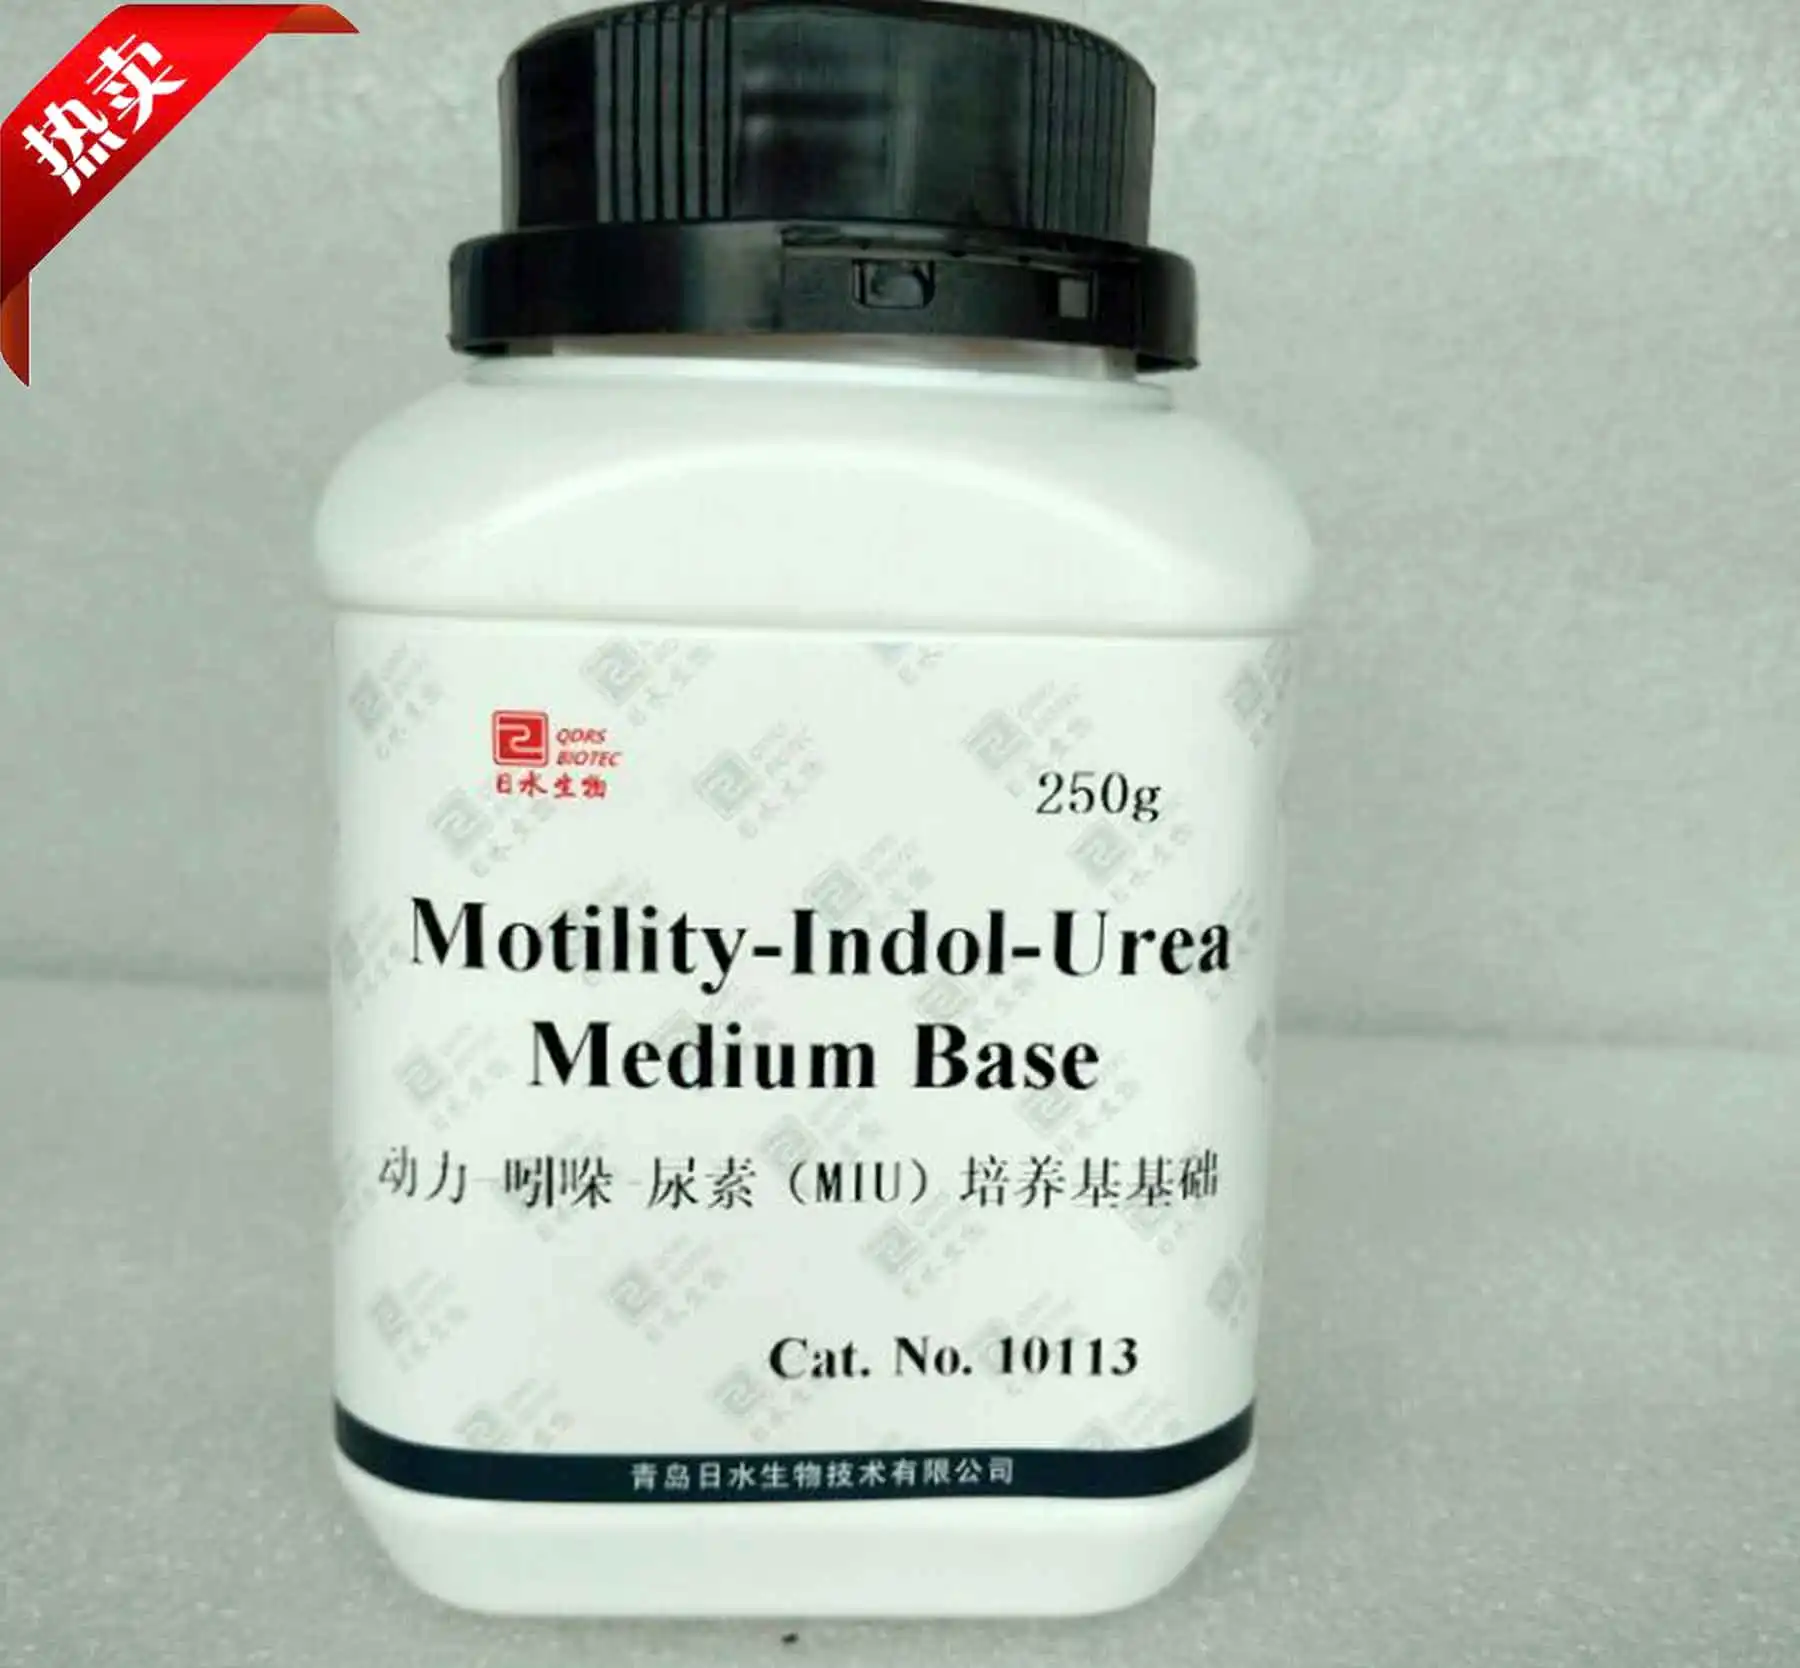 Motility-Indol-Urea Medium Base Compound Biochemical Test Of Bacterial Dynamic Indole Urease Microbial Culture Medium